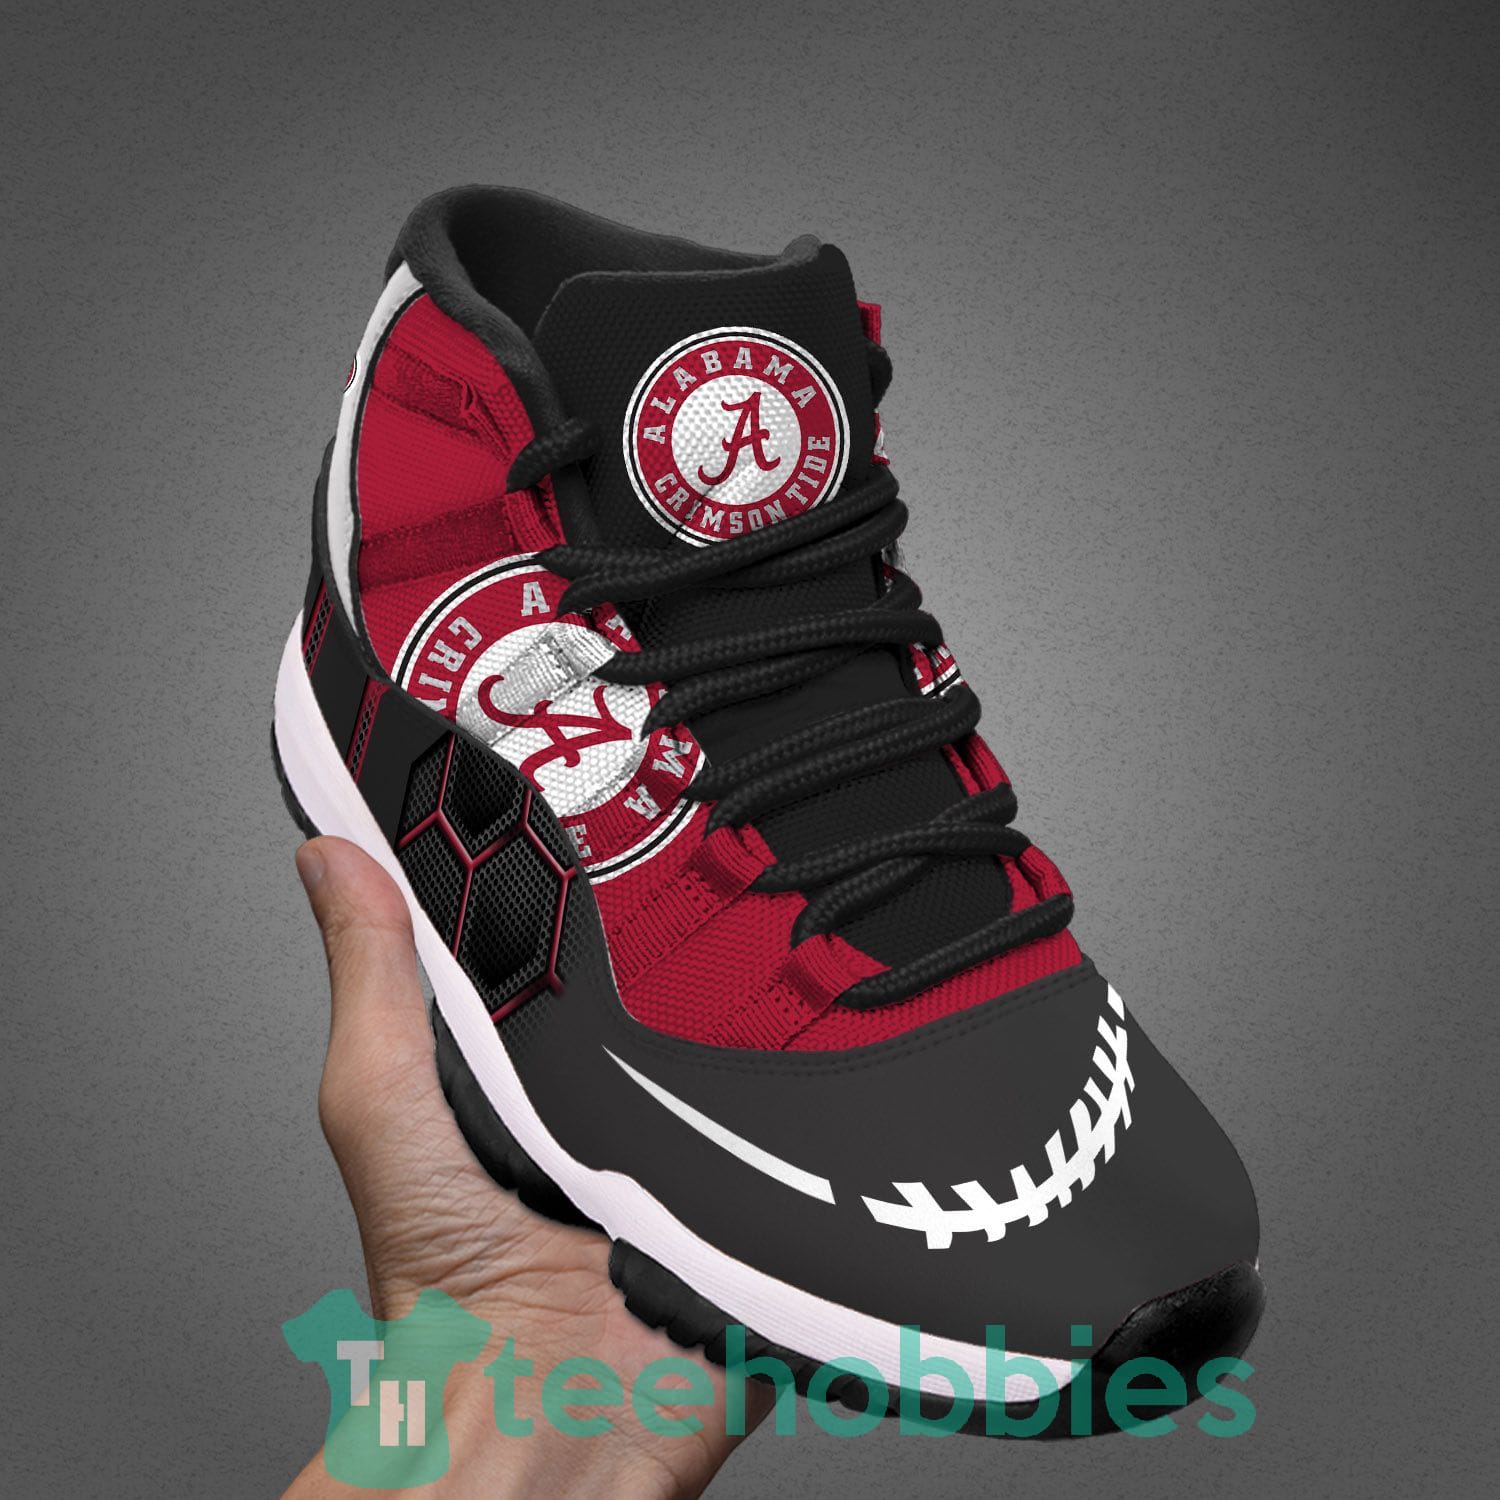 Alabama Crimson Tide New Air Jordan 11 Sneakers Shoes Gift Product photo 2